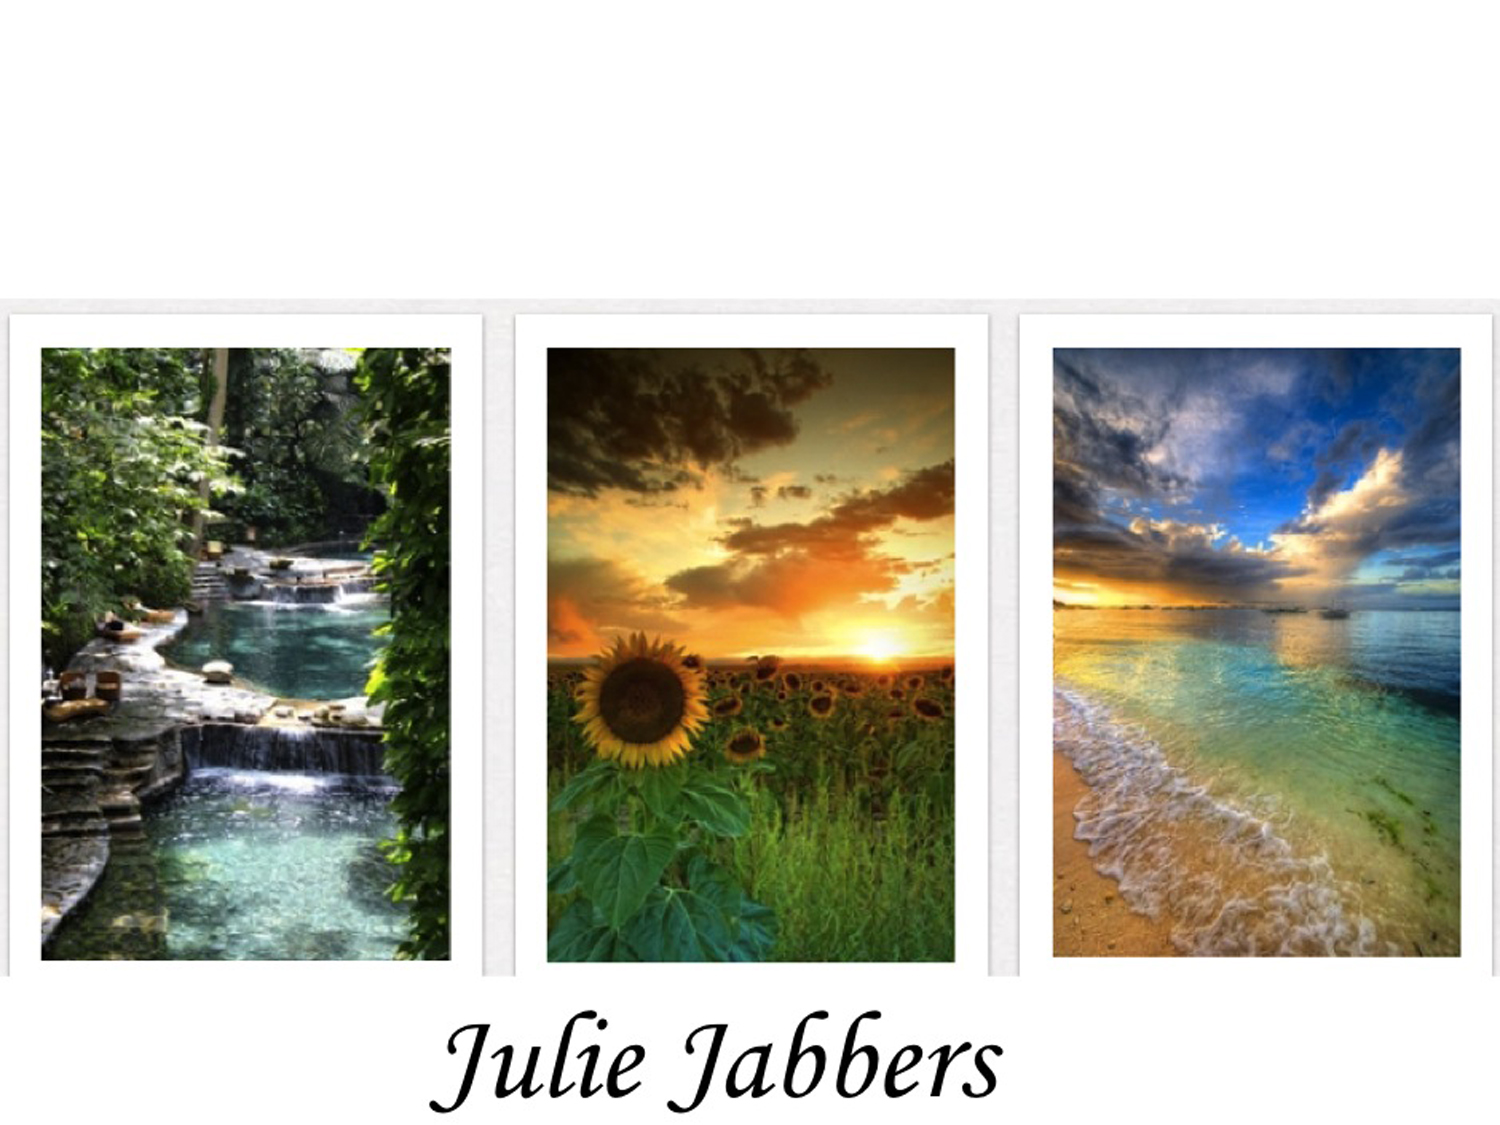 Julie Jabbers